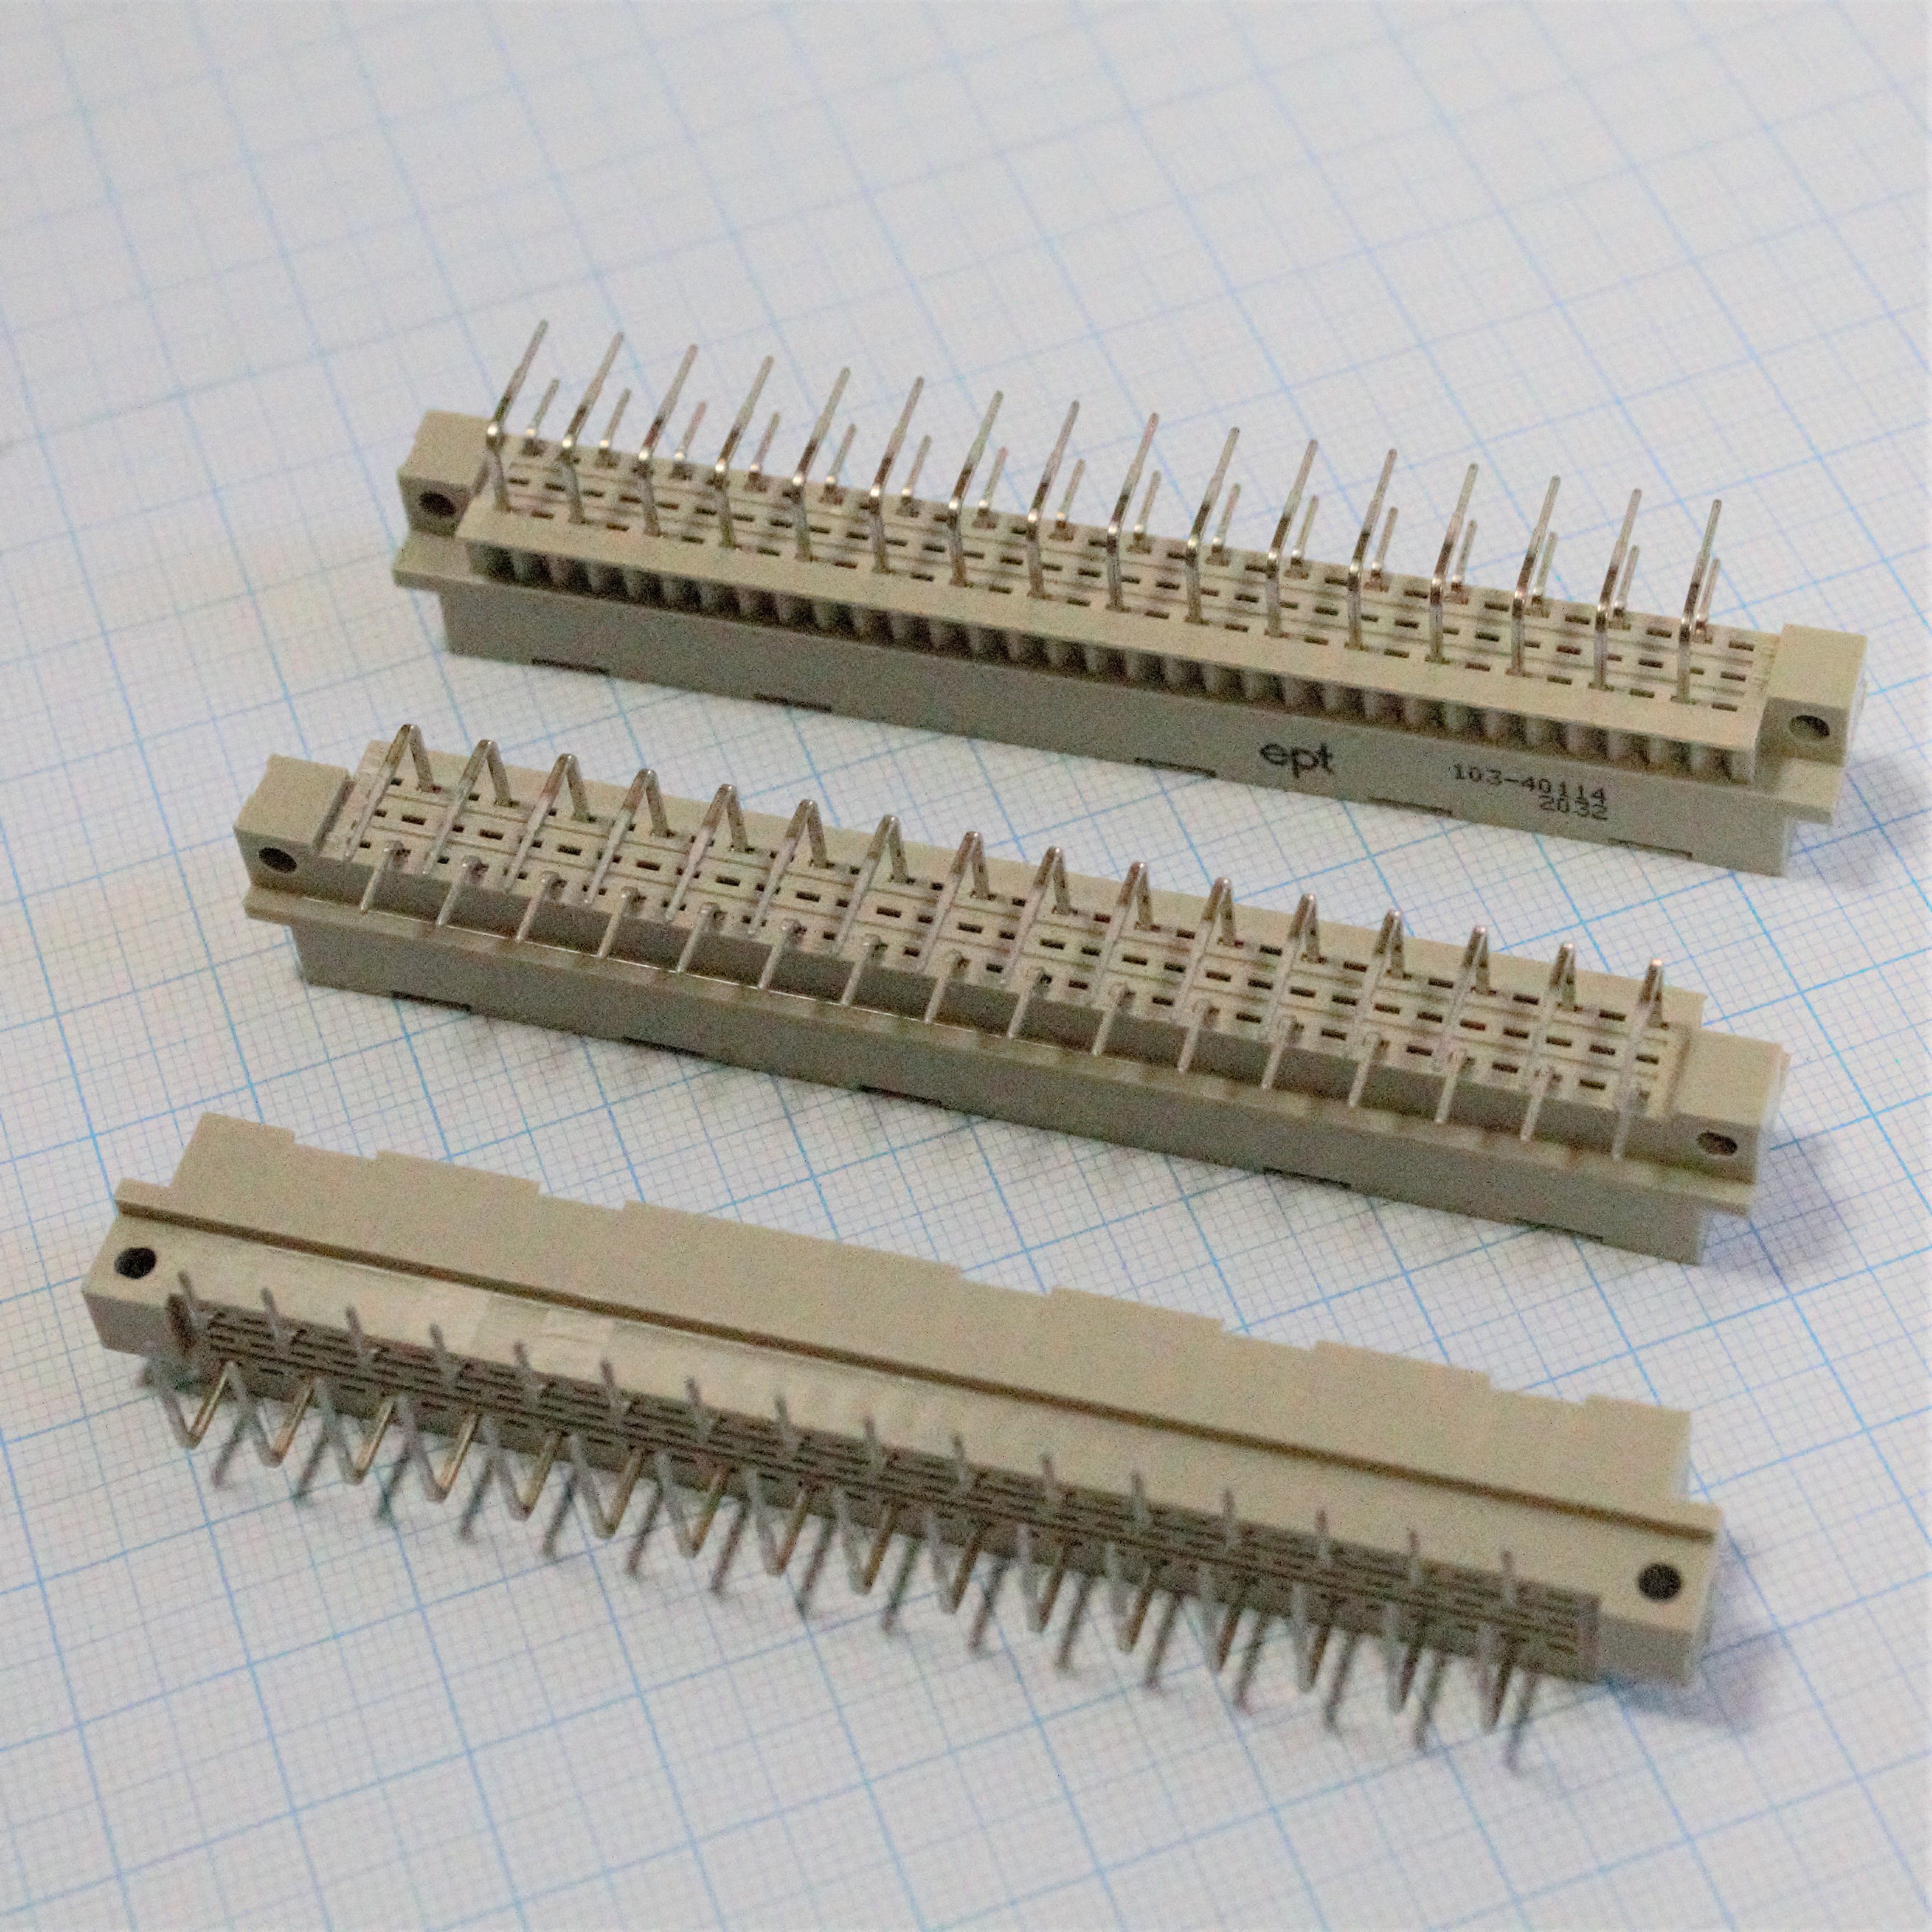 DIN 41612 32 pin ()   3  (AC) (103-40114)  5,08 ,  ept